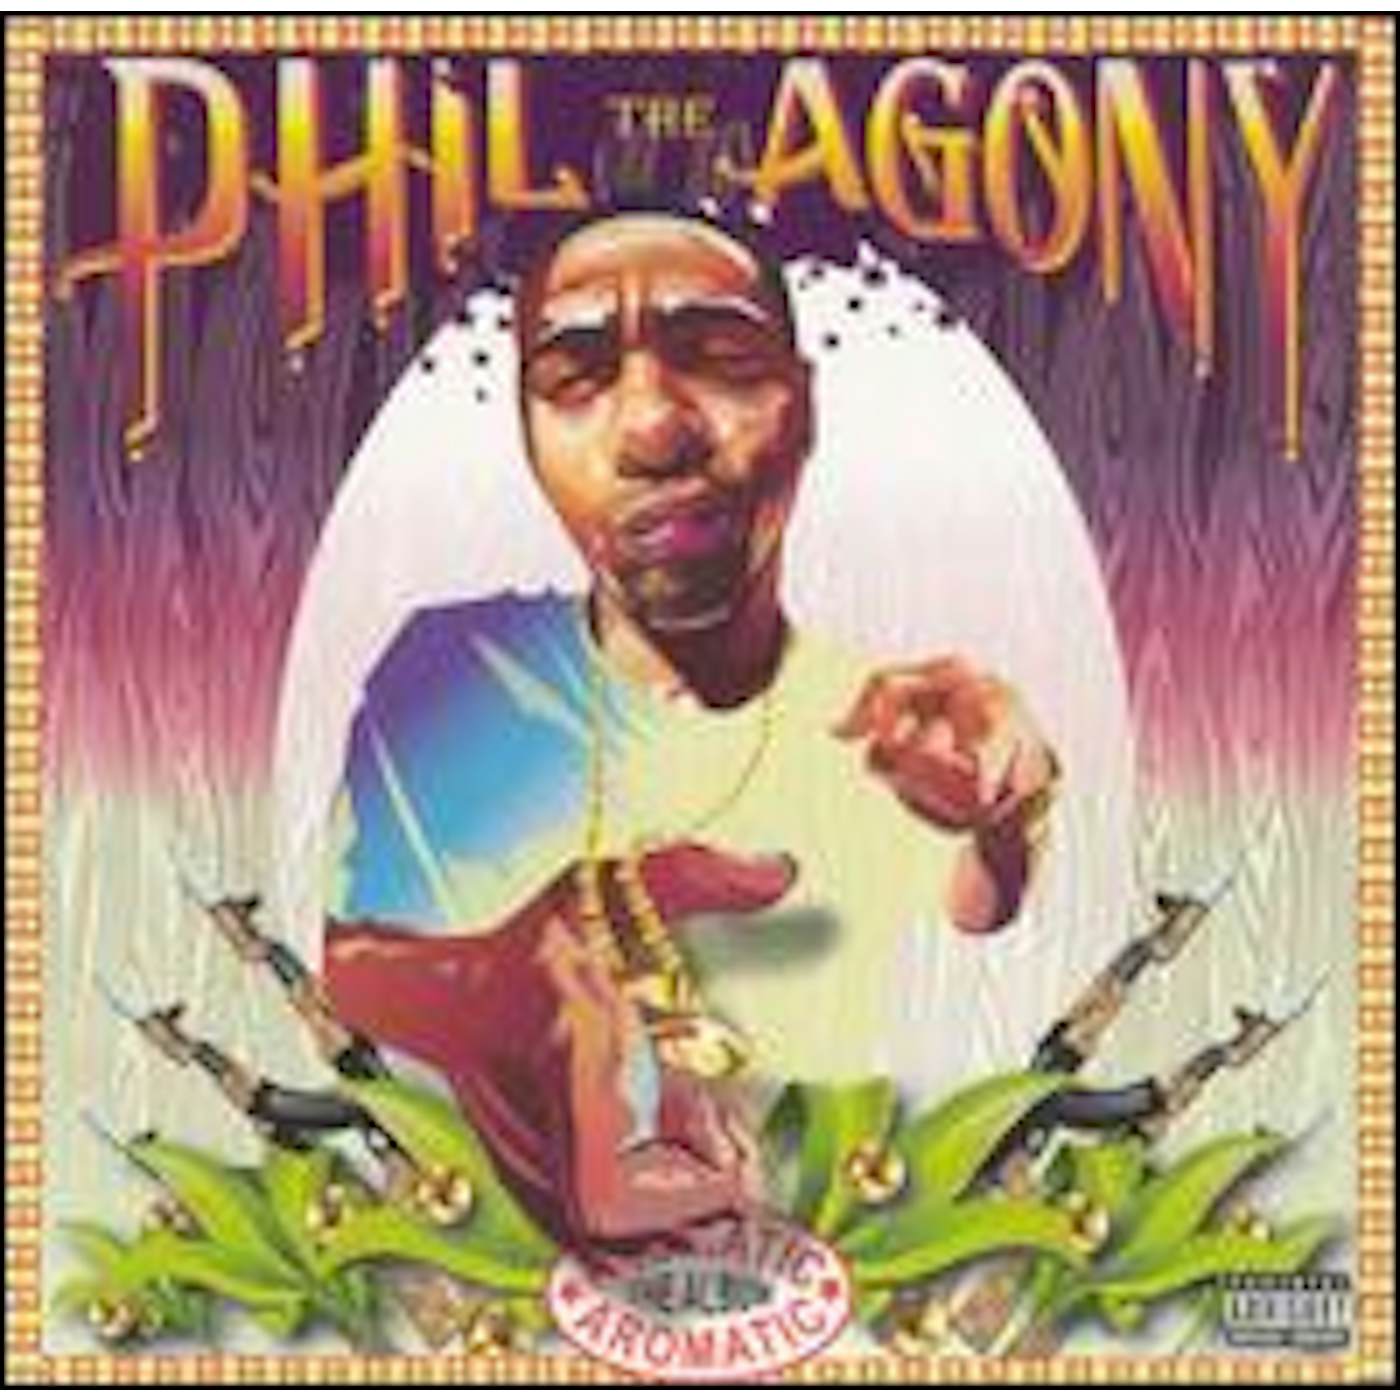 Phil The Agony AROMATIC Vinyl Record